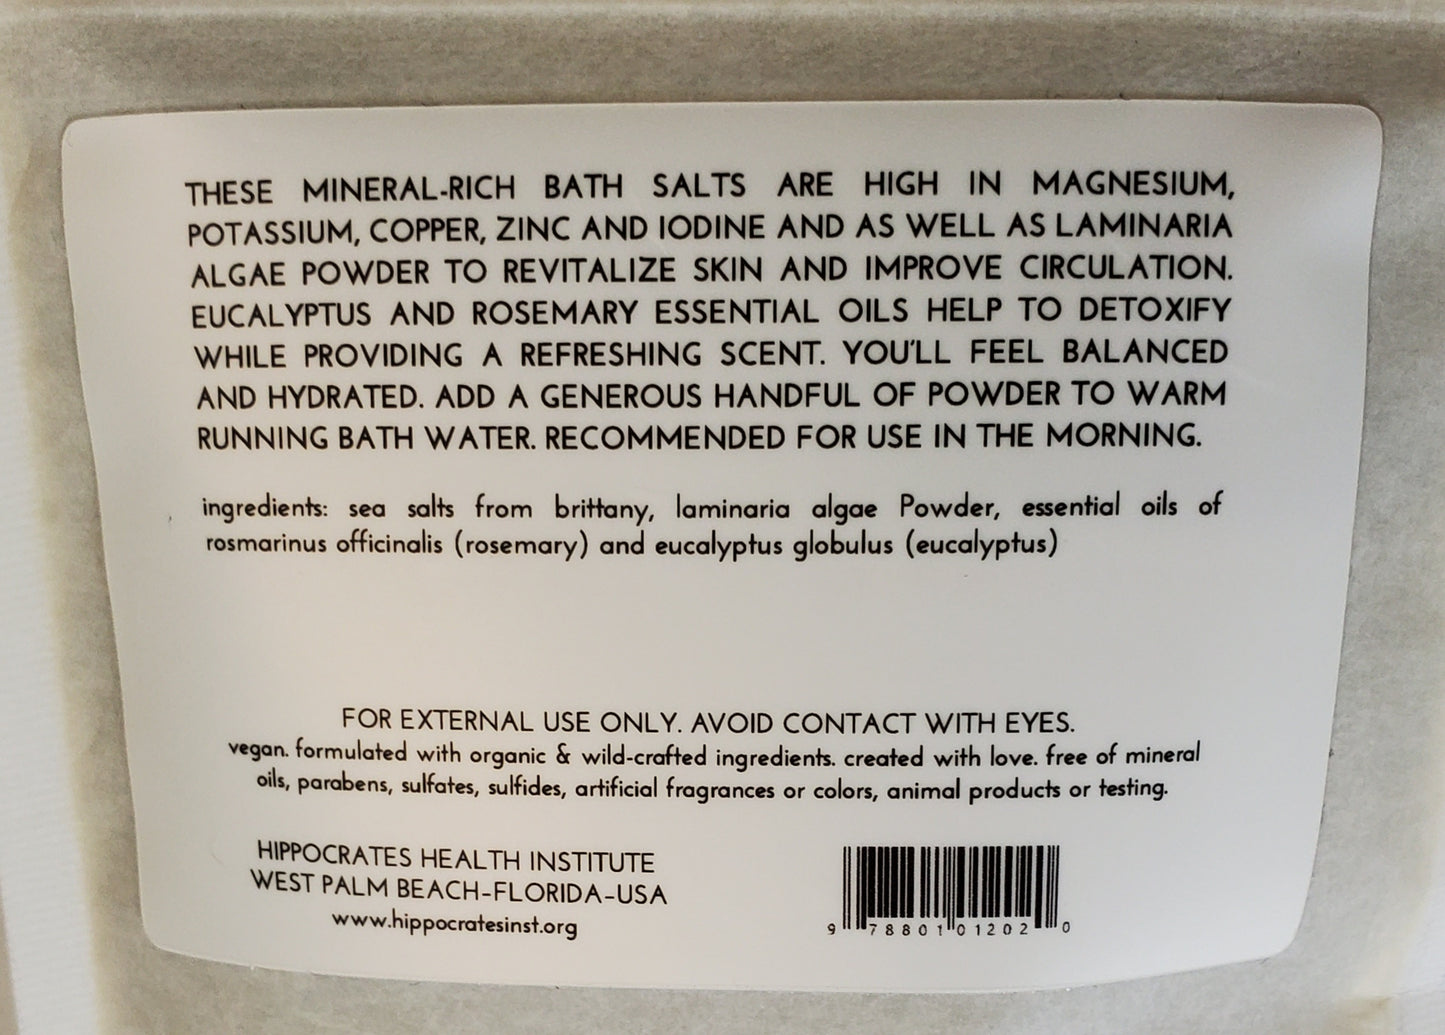 
                  
                    Become Invigorated Seaweed Detox Bath Salts
                  
                